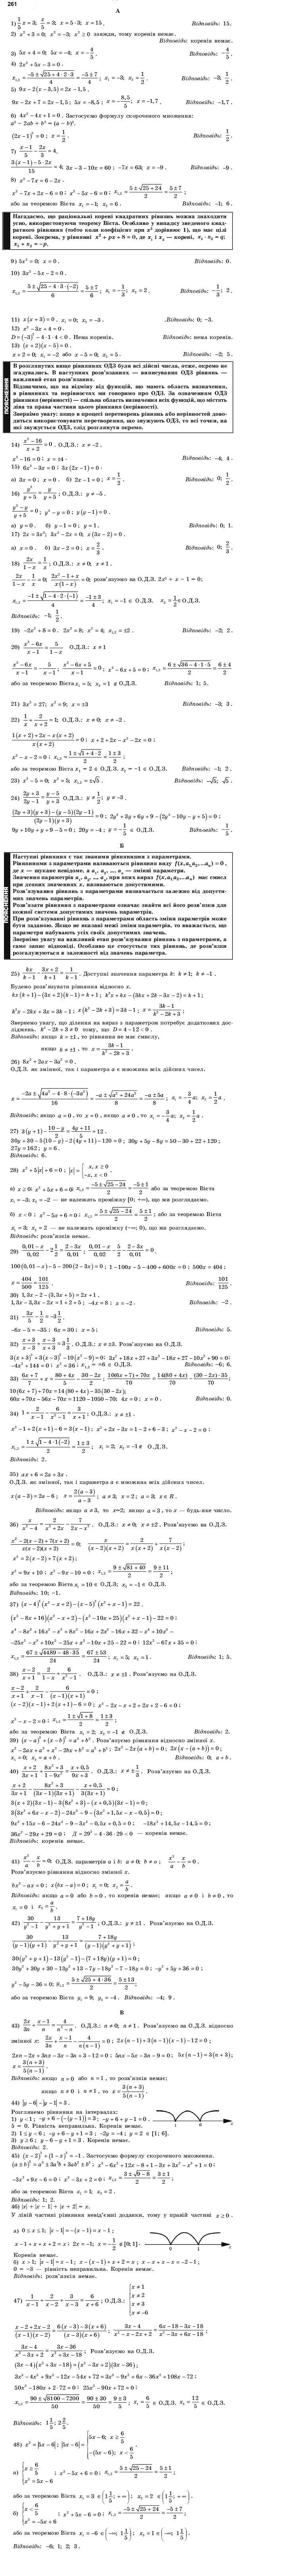 Алгебра і початки аналізу 11 клас Шкіль М.І., Слєпкань З.І., Дубинчук О.С. Задание 261